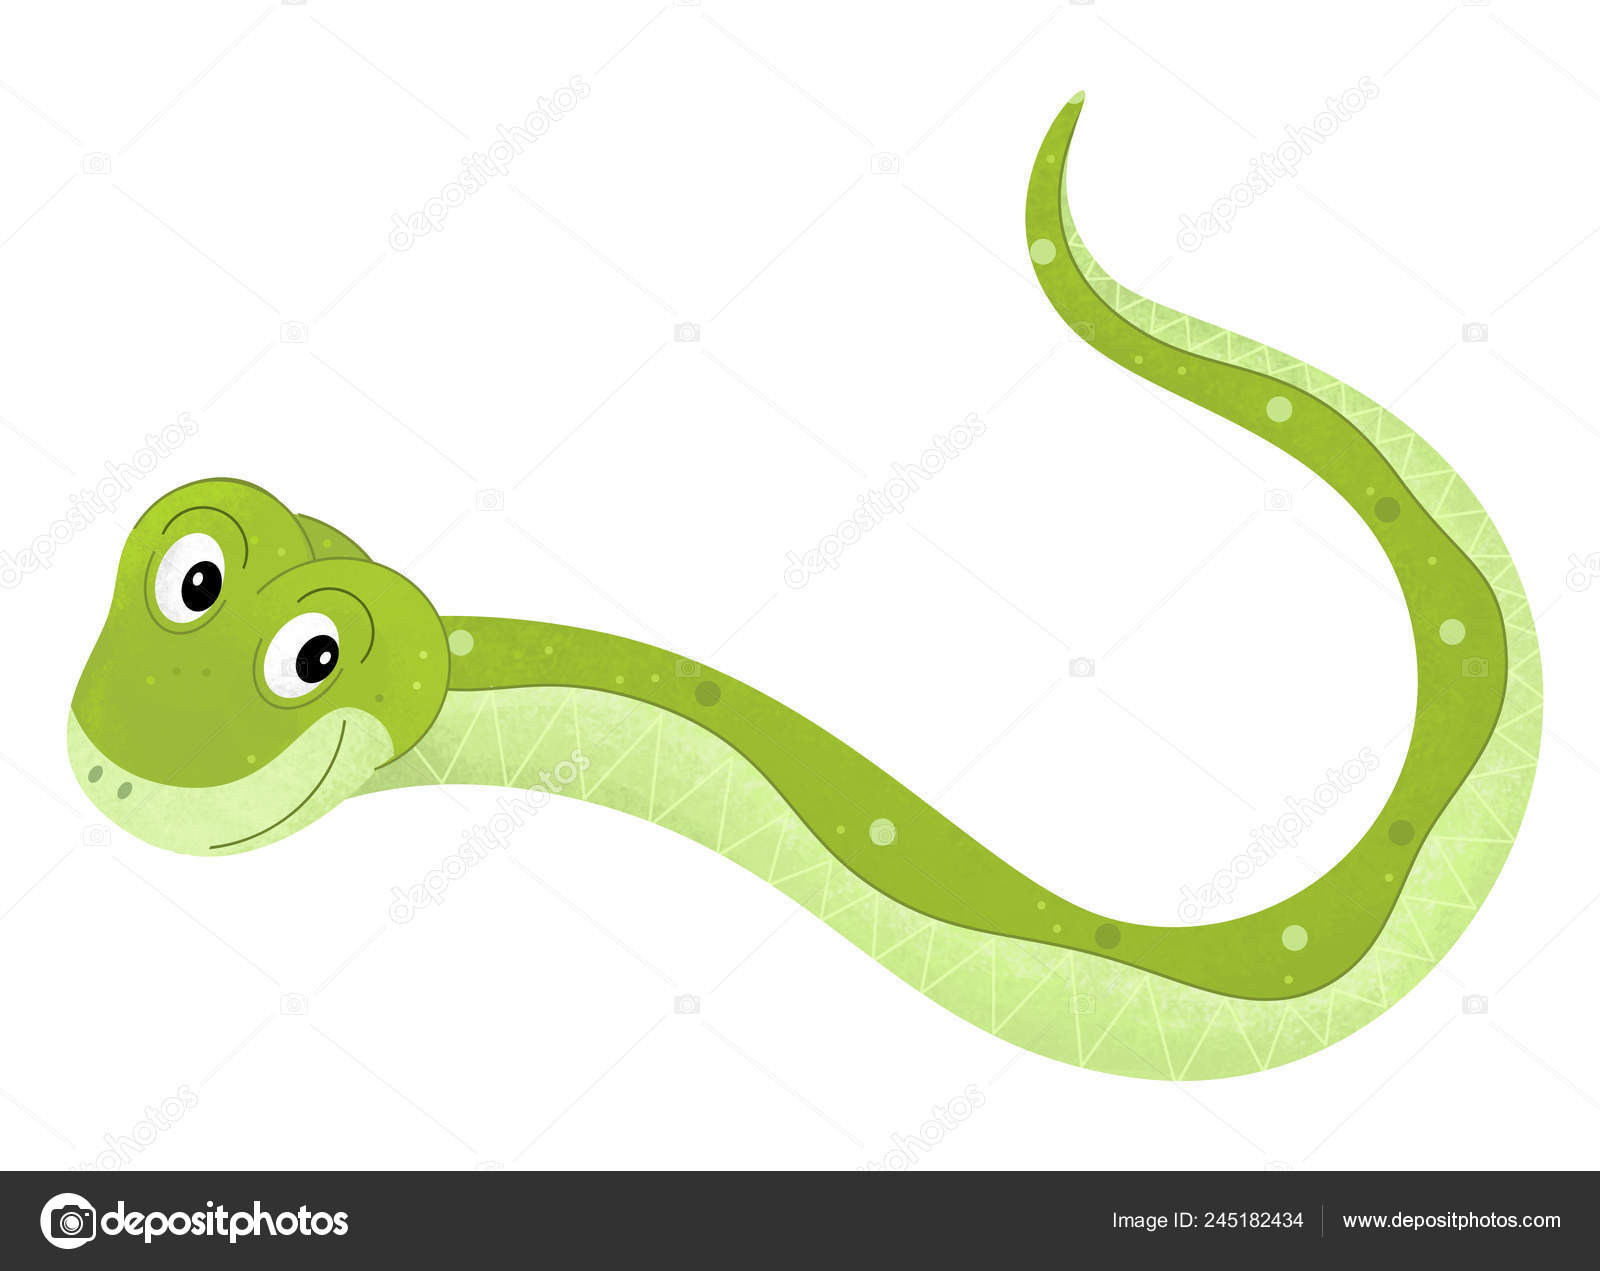 Cartoon Scene Snake White Background Sign Name Animal Illustration Children  Stock Photo by ©agaes8080 245182434